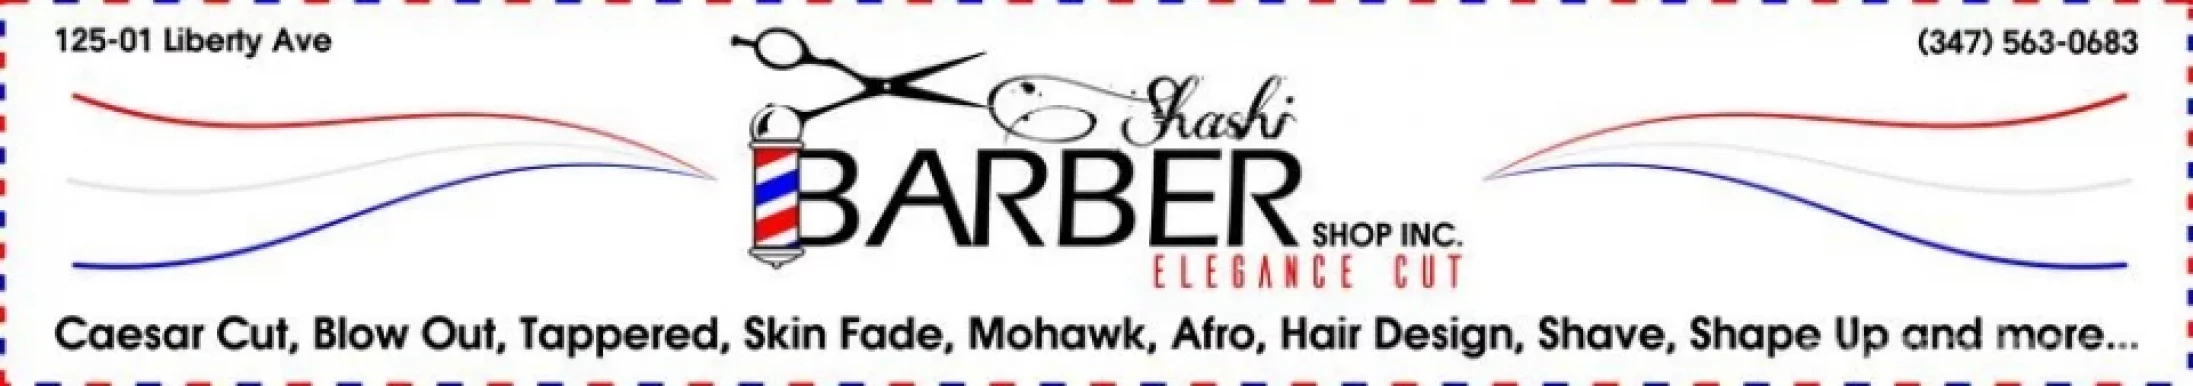 Shashi's Barber Shop Inc. Elegance Cut, New York City - Photo 1